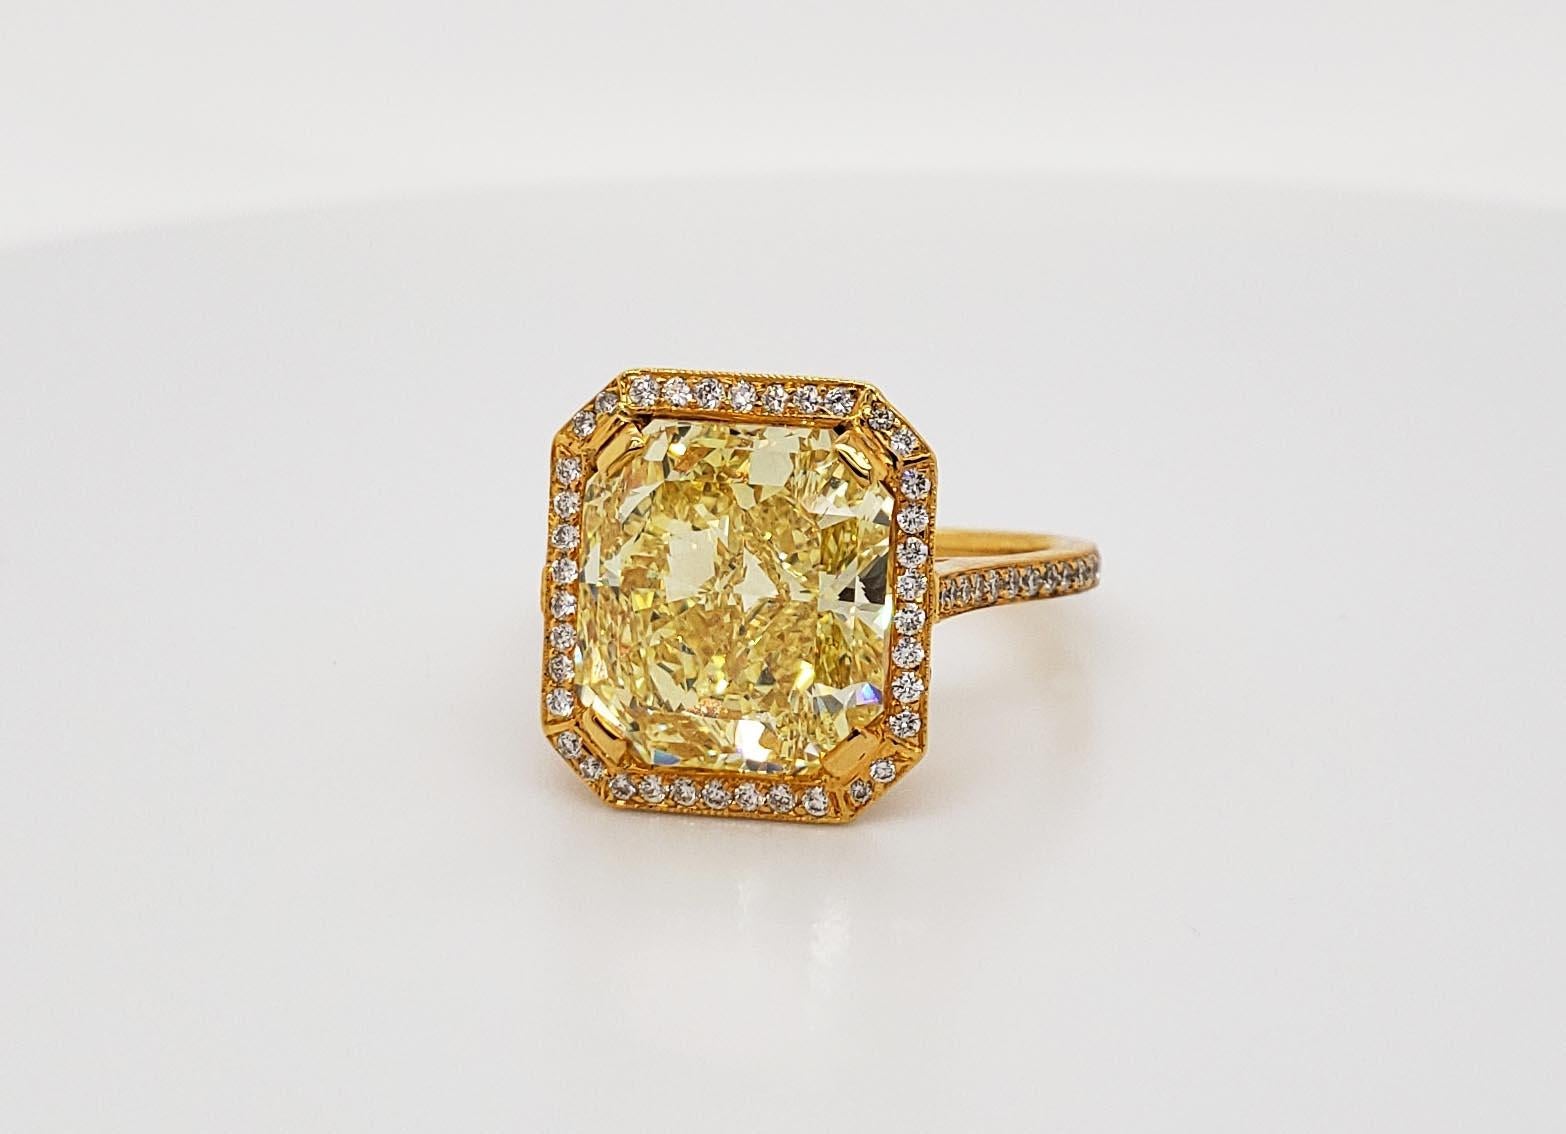 Contemporary Scarselli 6.70 Carat Fancy Vivid Yellow Radiant Cut Diamond Ring VS2 GIA